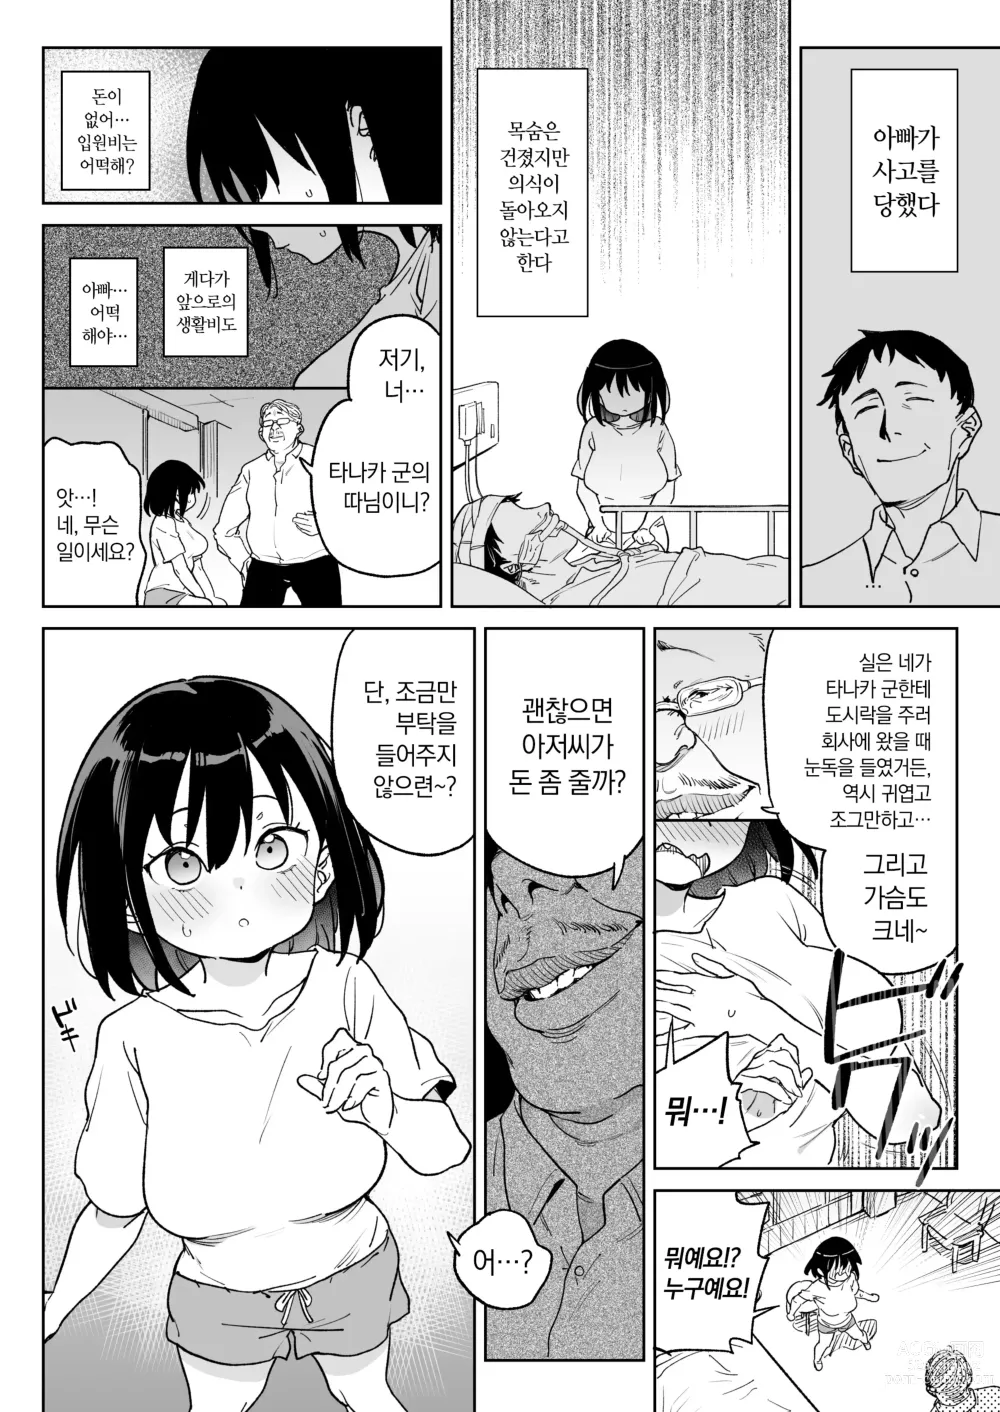 Page 5 of doujinshi 11월 28일 새 아빠의 소유물이 되었습니다.